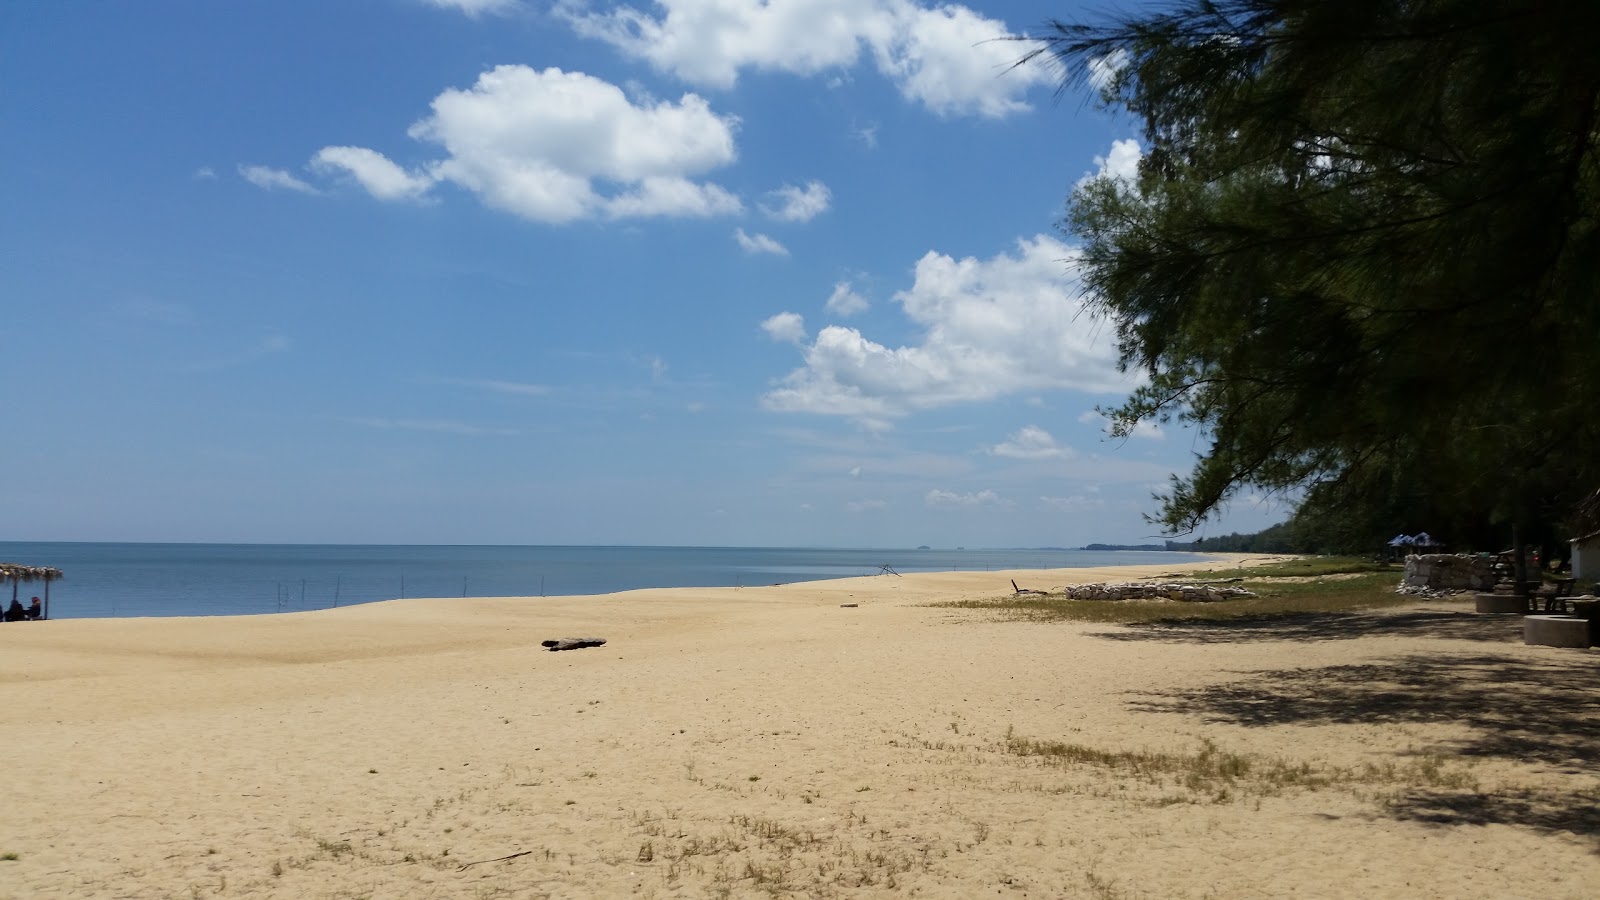 Photo of Rantau Panjang Beach with bright sand surface